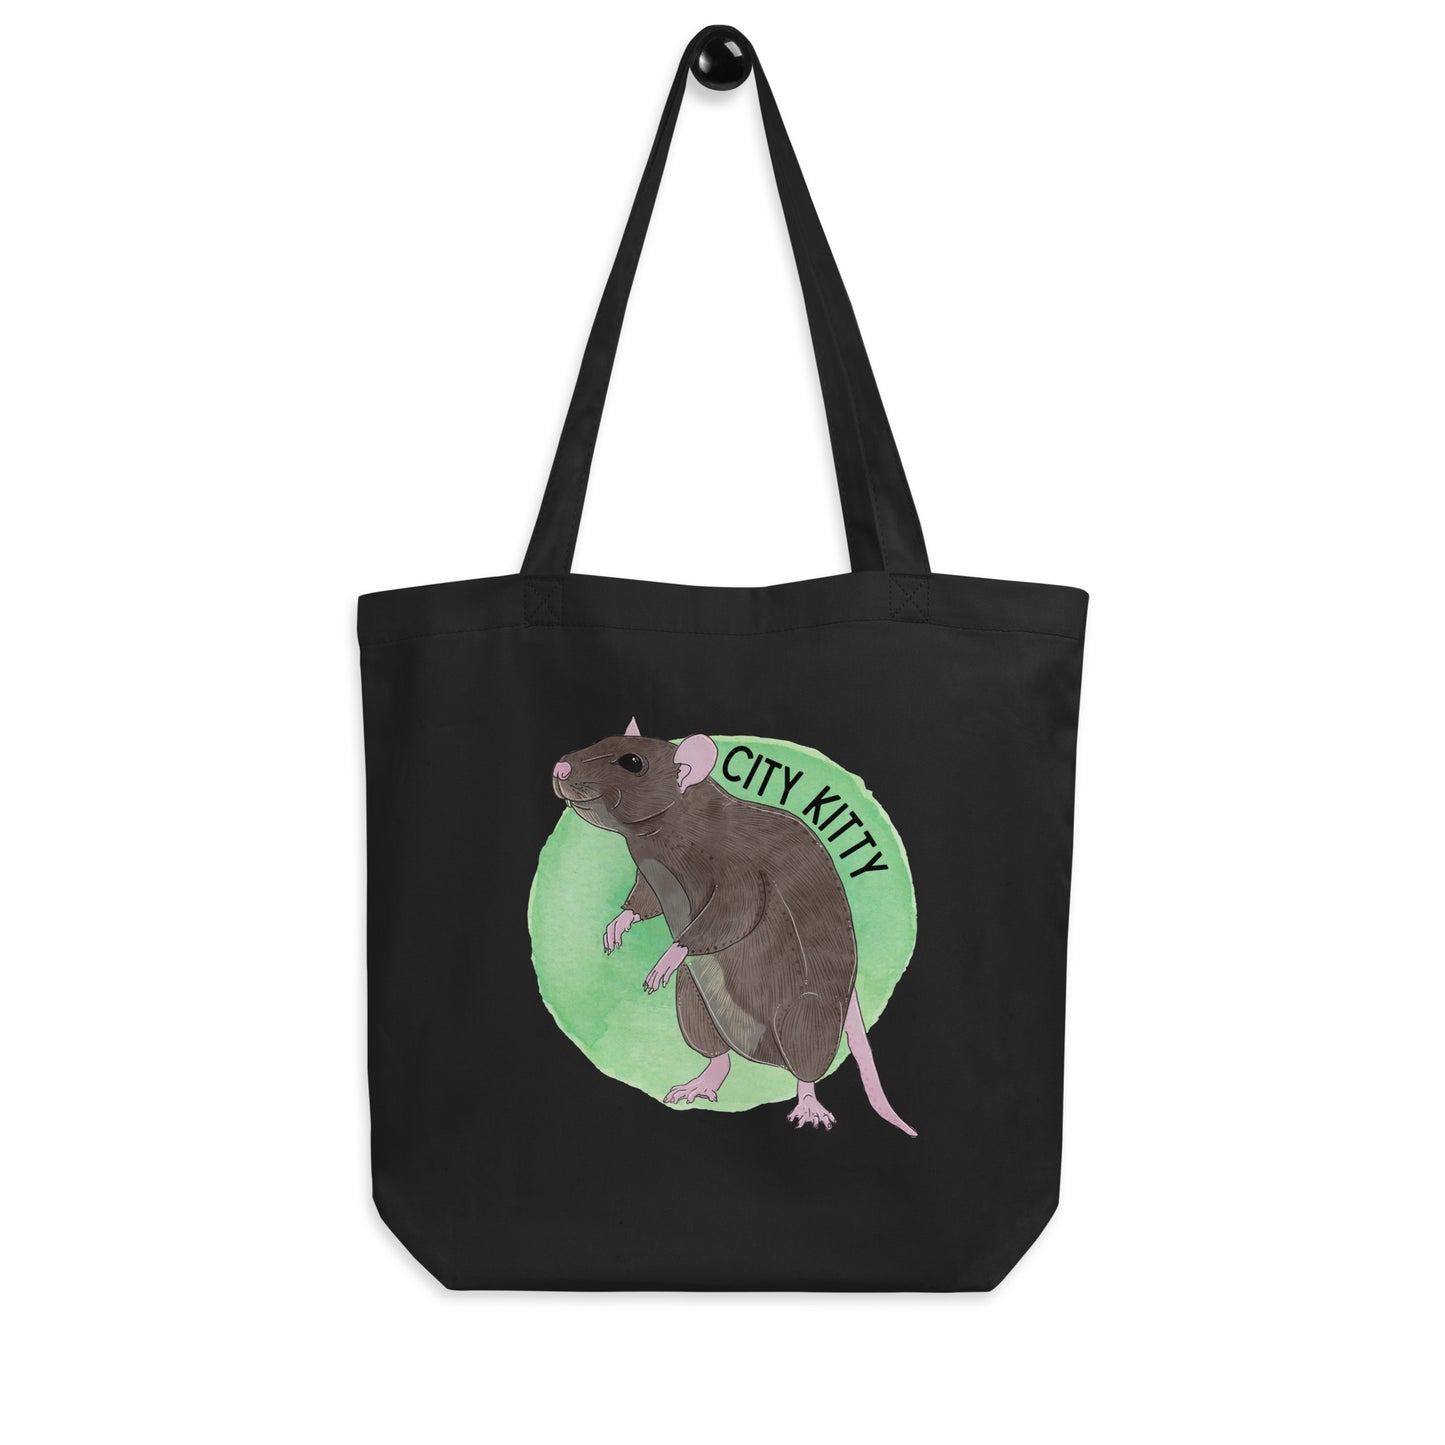 City Kitty Tote Bag